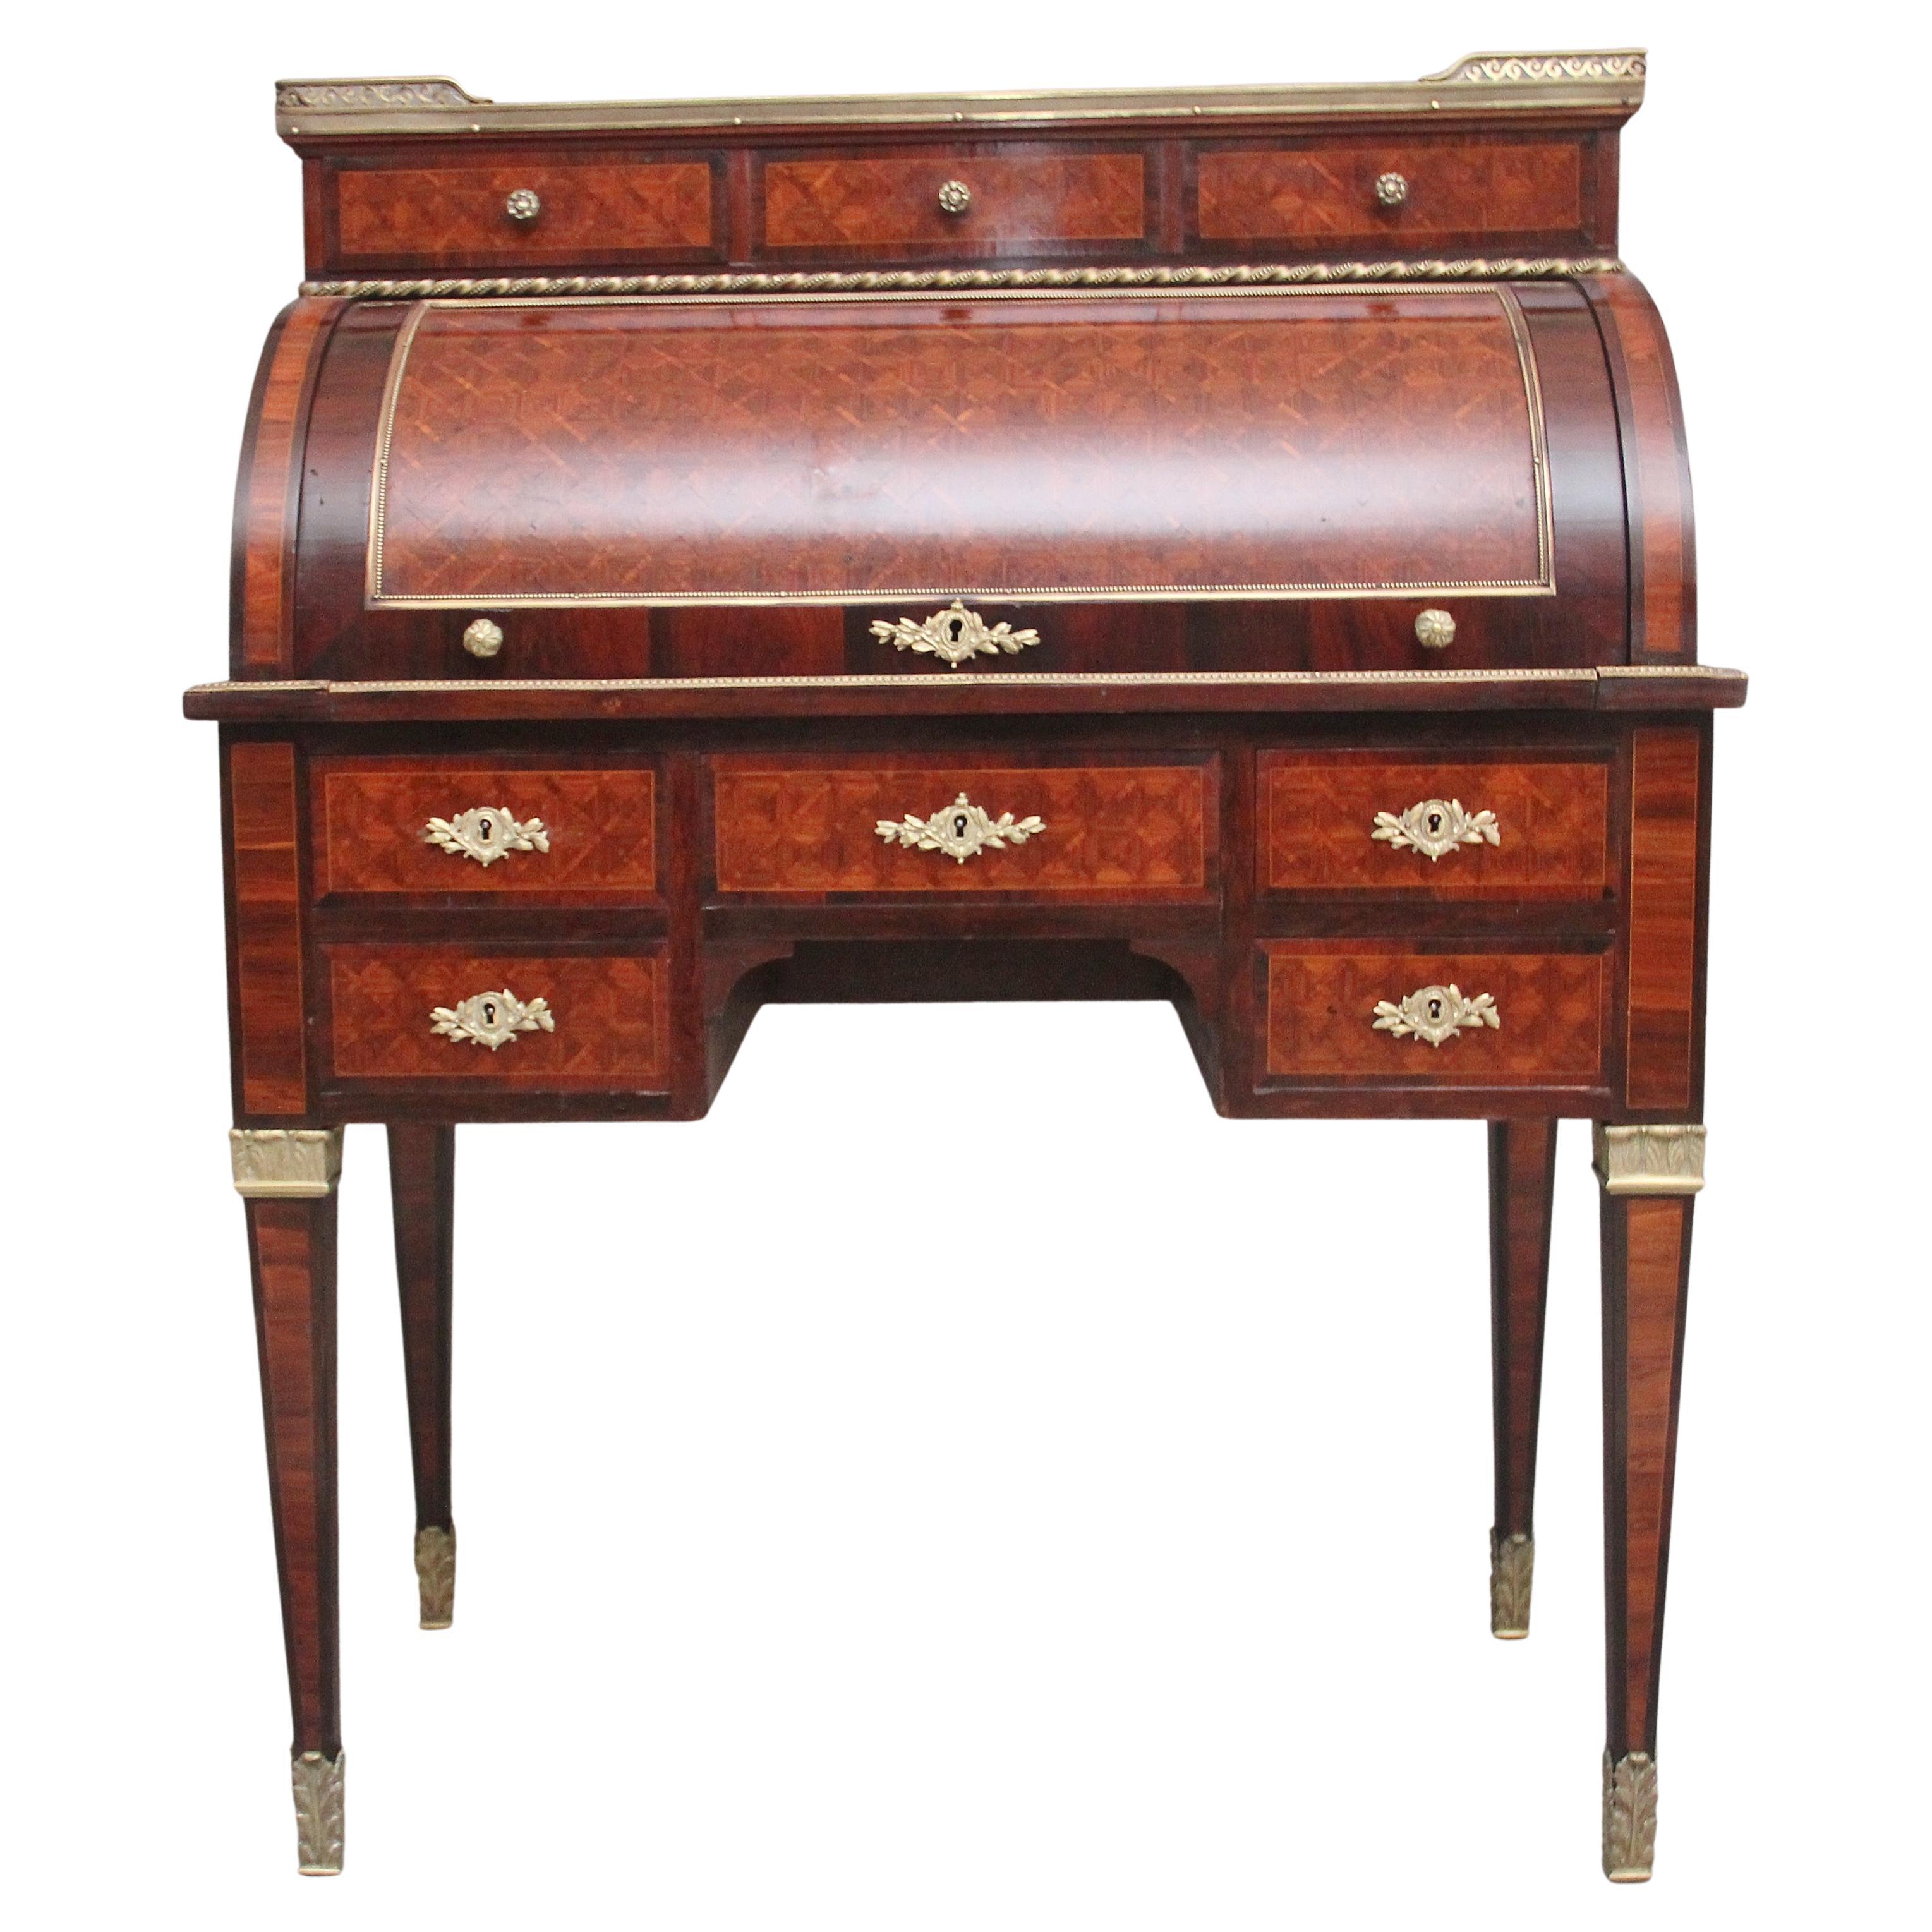 19th Century French Kingwood cylinder desk